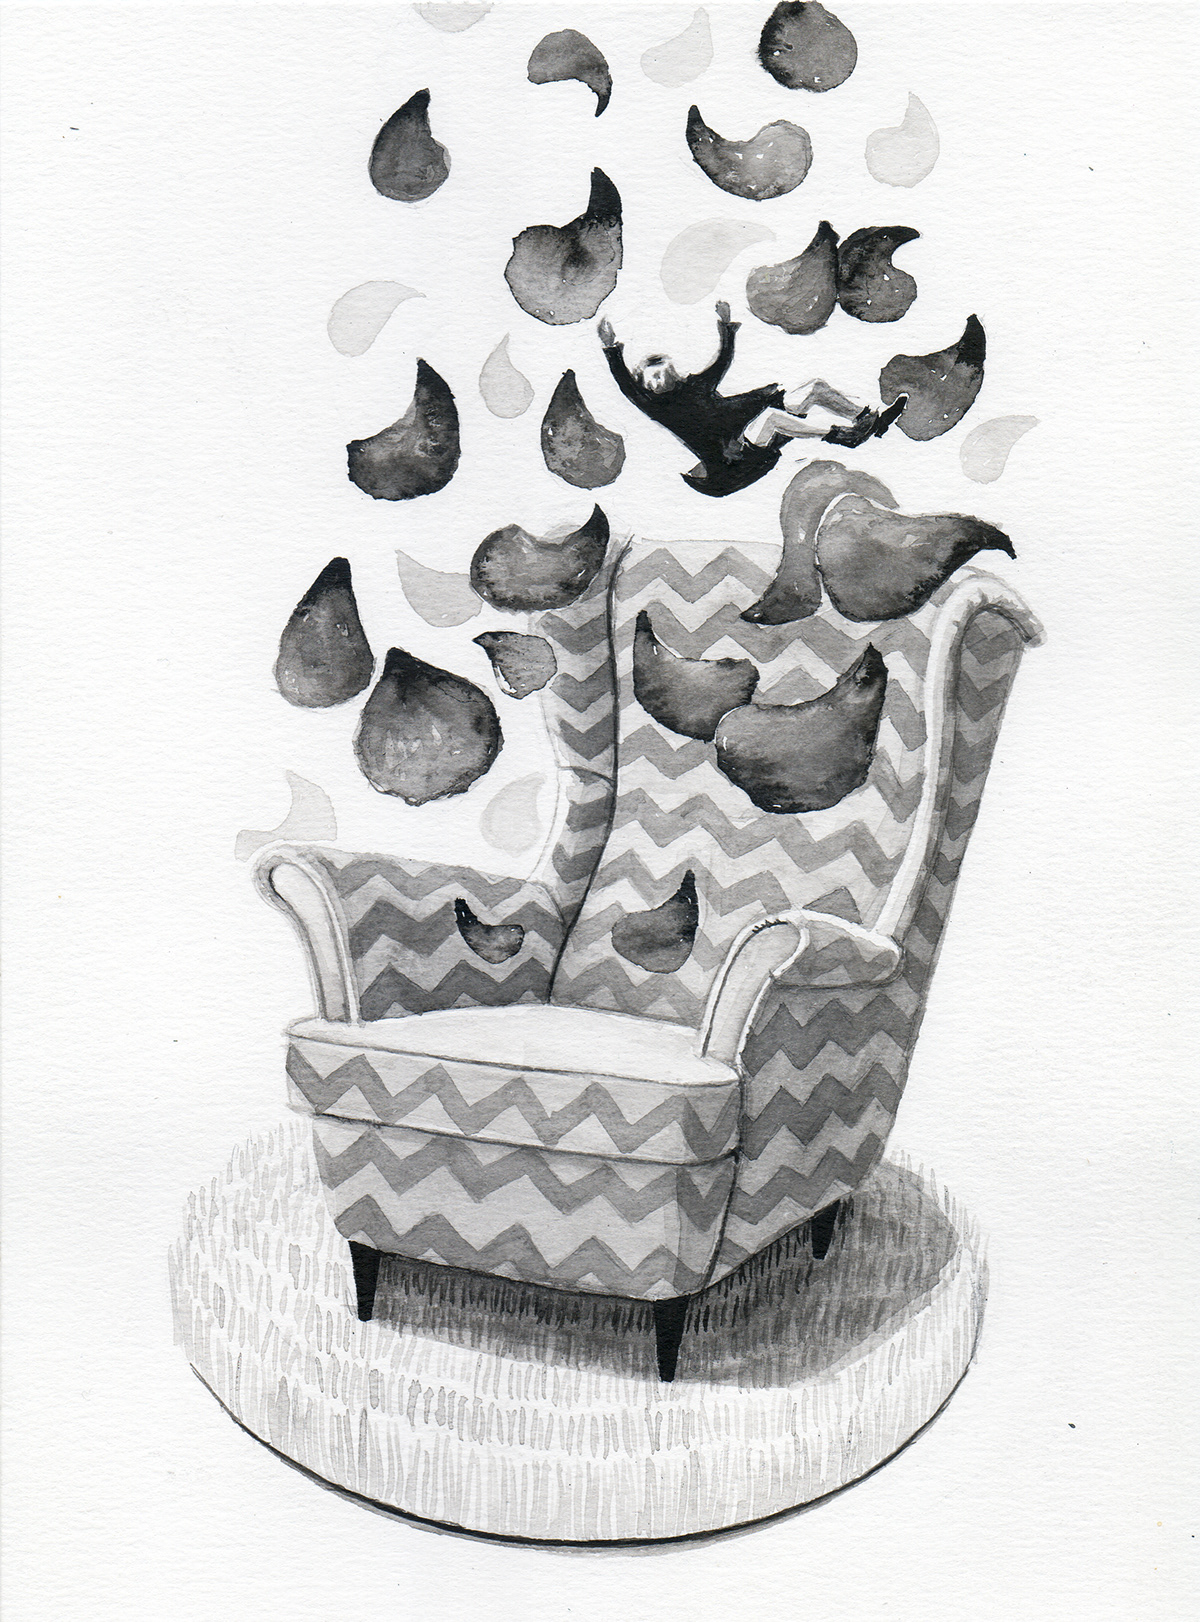 inkdrawing ILLUSTRATION  portrait Black&white girl surrealism heart Mushrooms Drawing  ink